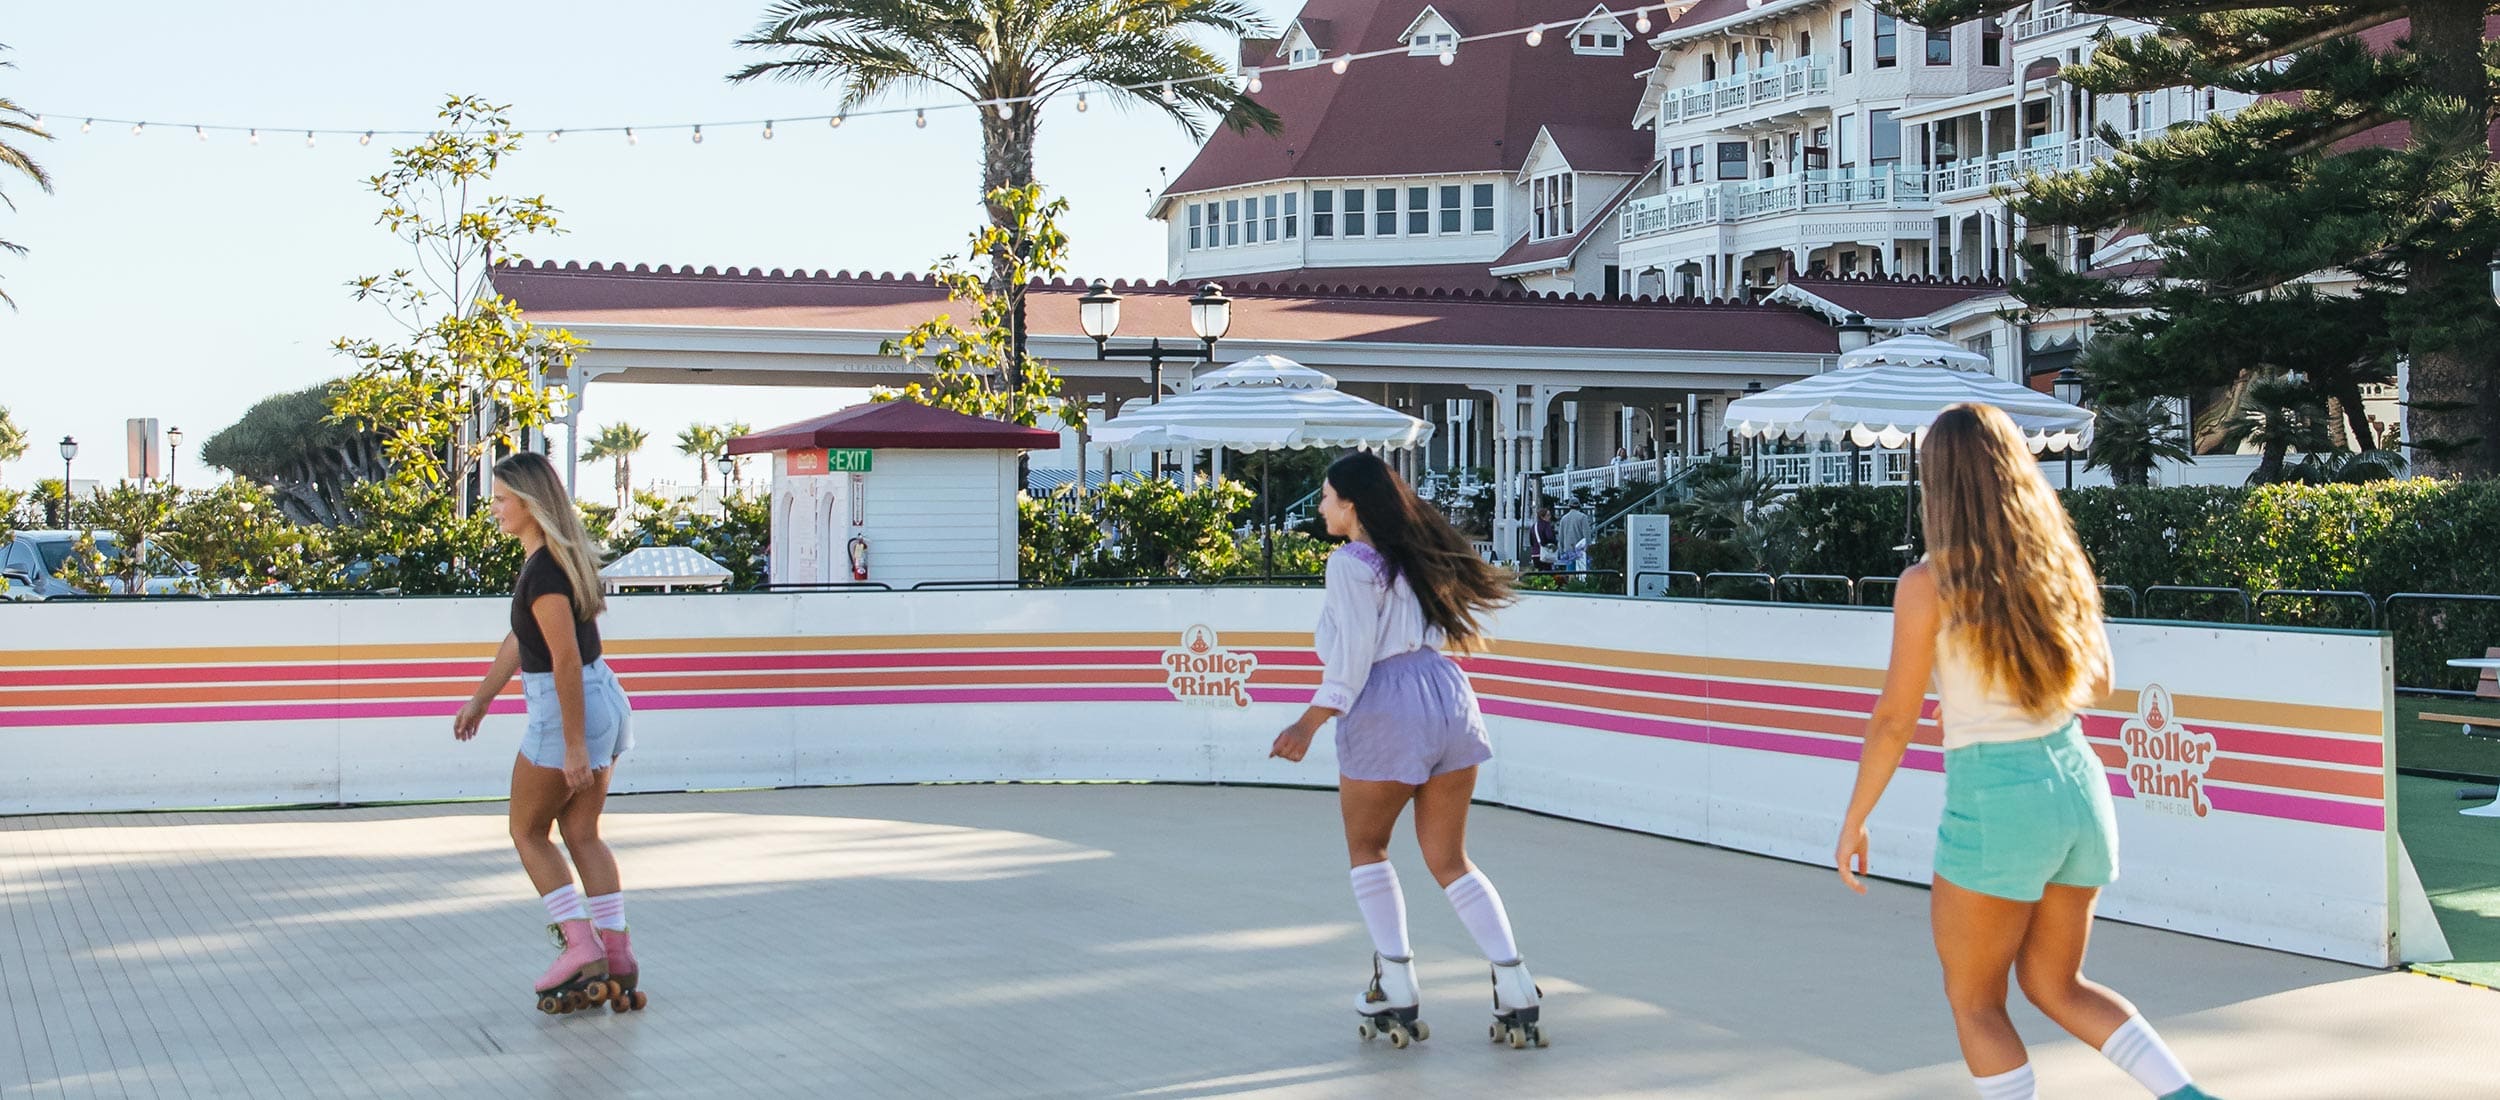 Women roller skating at Hotel del Coronado